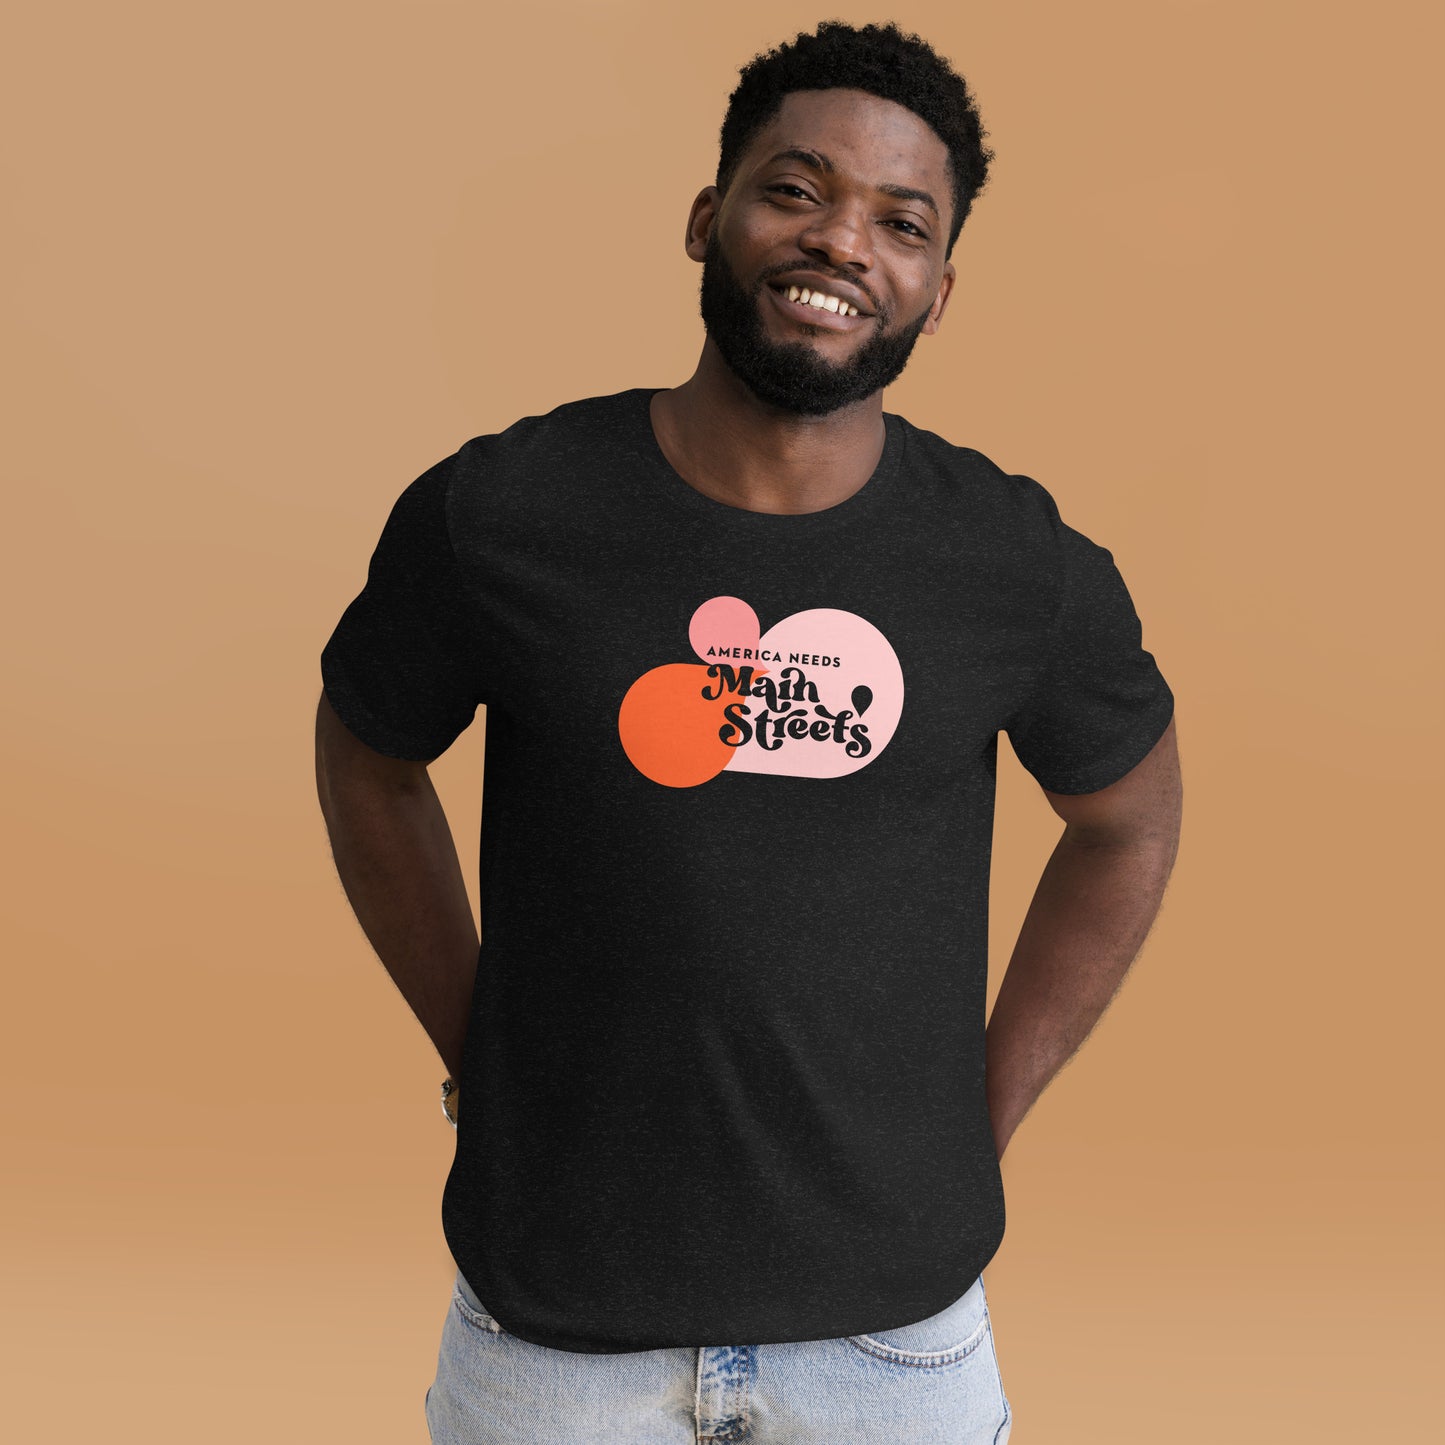 Customizable "America Needs Main Streets" Pink Bubbles Unisex T-shirt